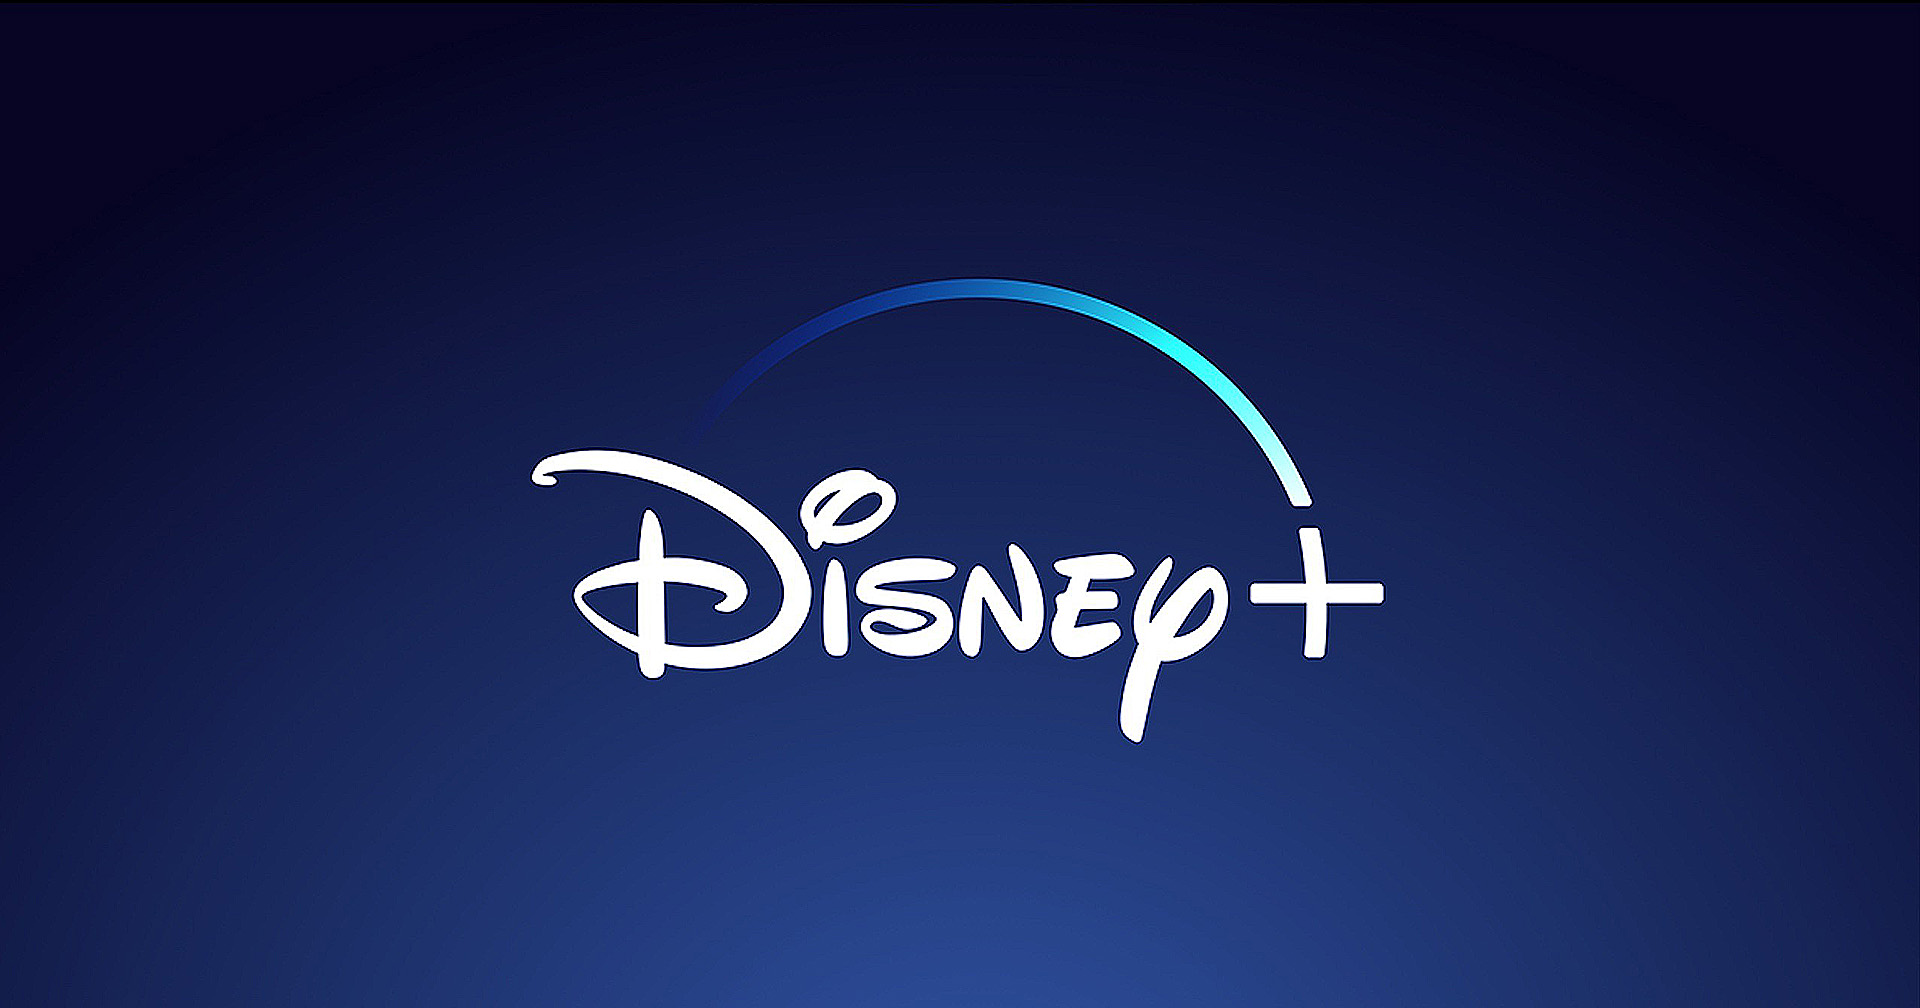 Disney+ เตรียมเปิดตัวสุดยิ่งใหญ่ในเกาหลีใต้ ฮ่องกง และไต้หวัน ในเดือนพฤศจิกายน 2564 นี้